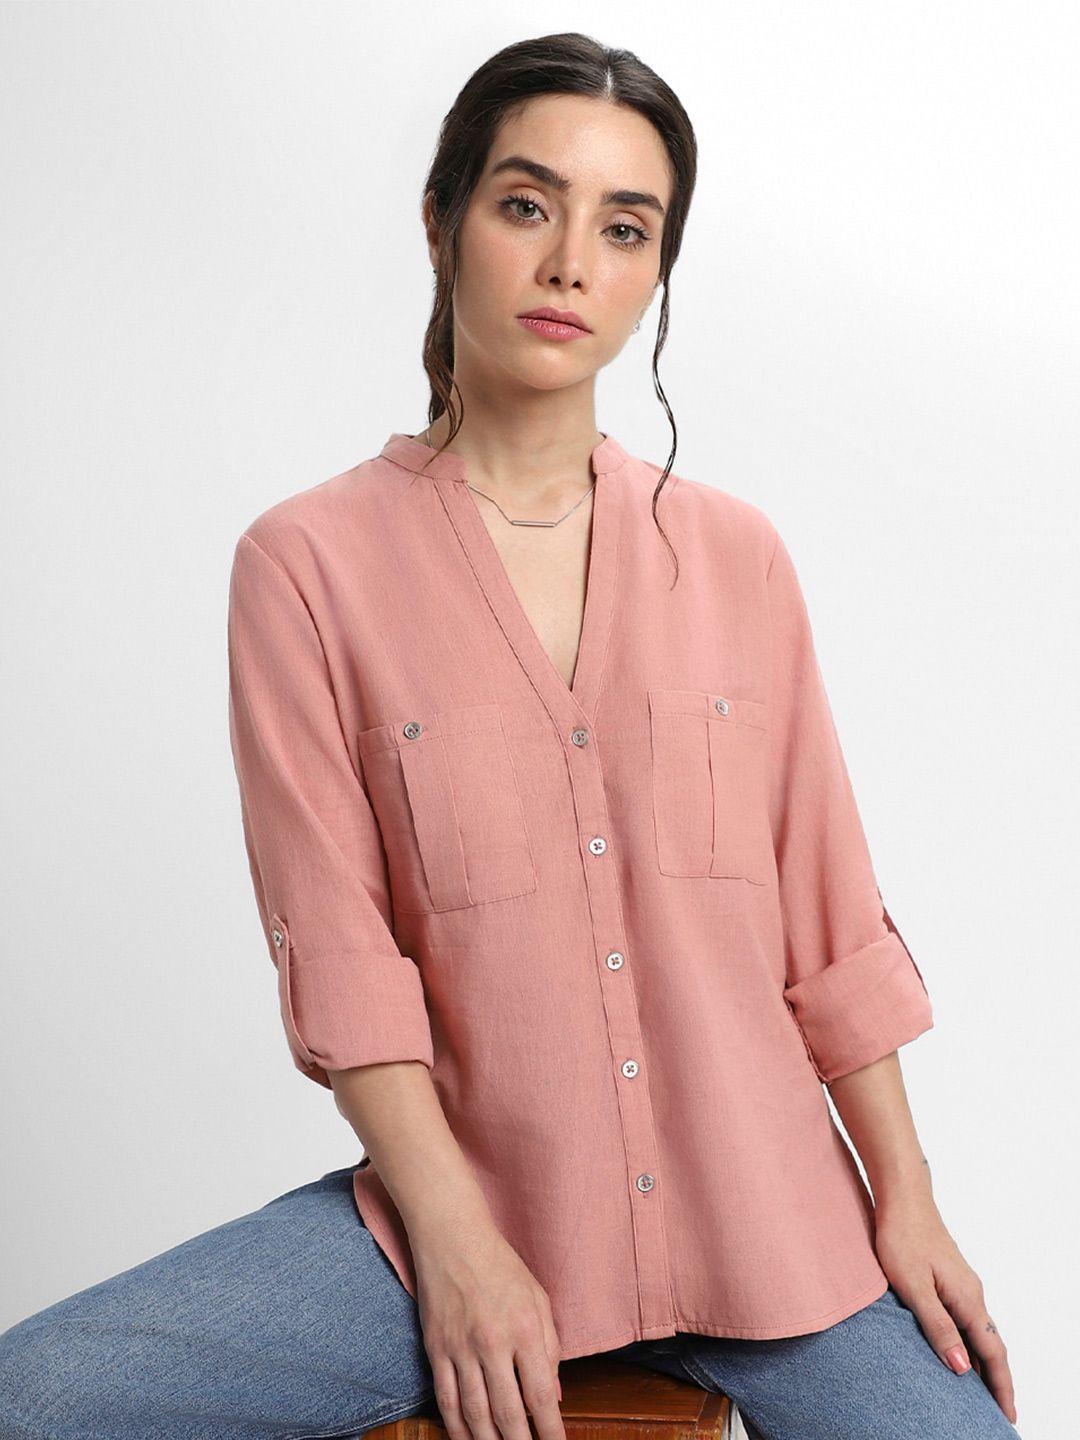 dl woman mandarin collar roll-up sleeves cotton shirt style top